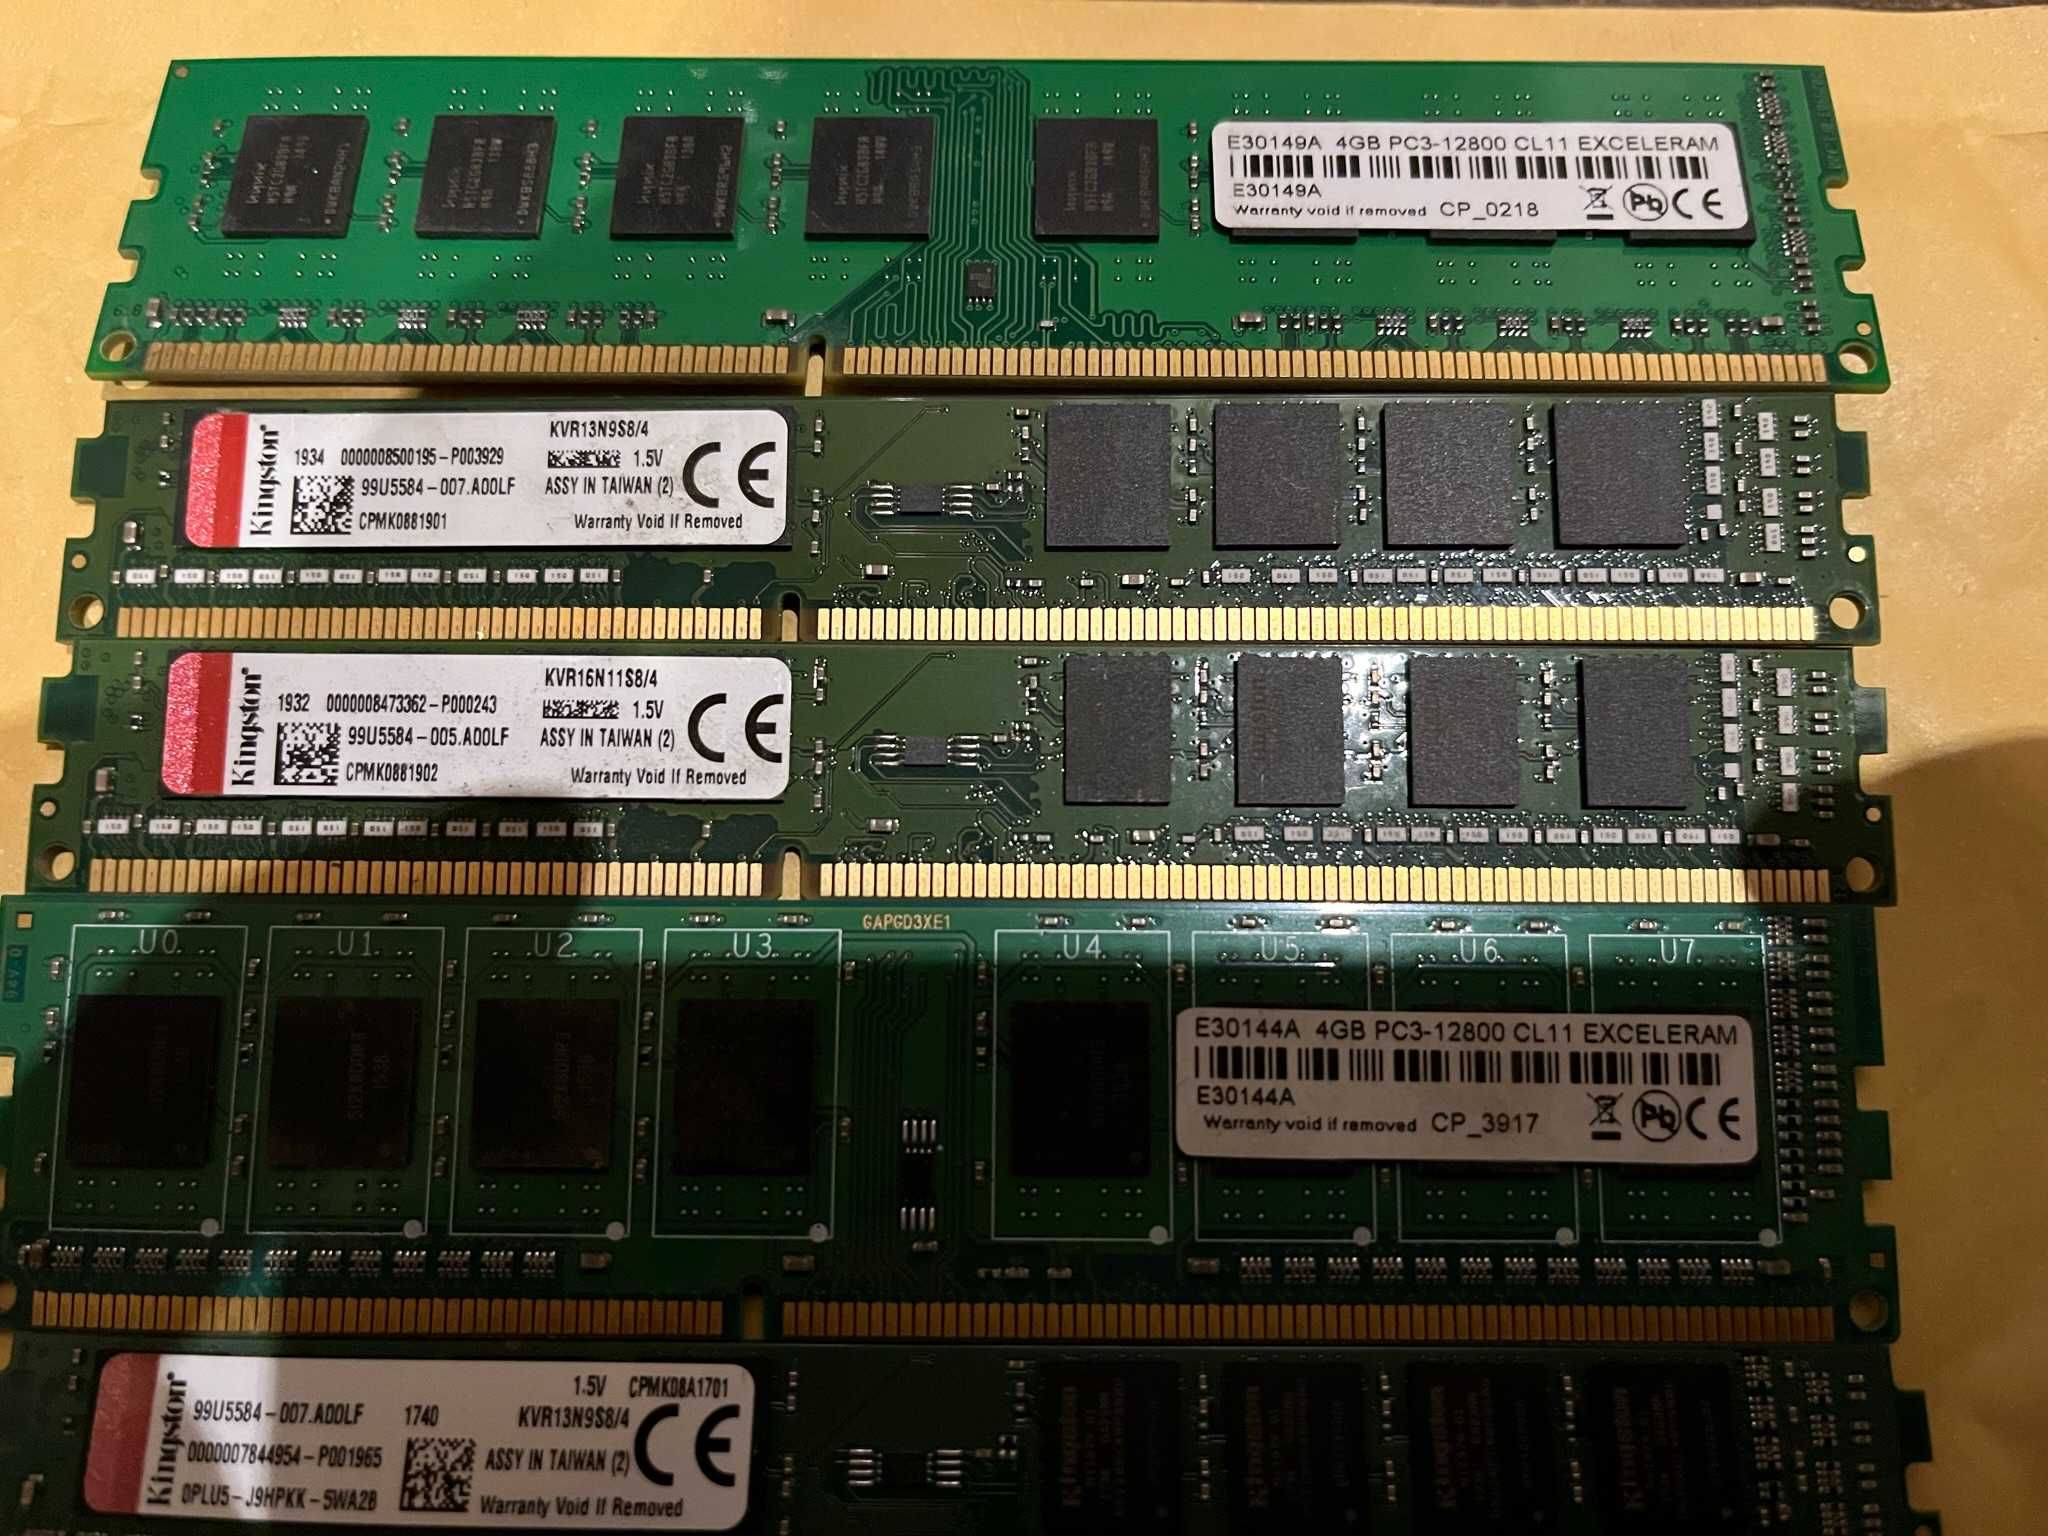 Оперативная память DDR3 4gb